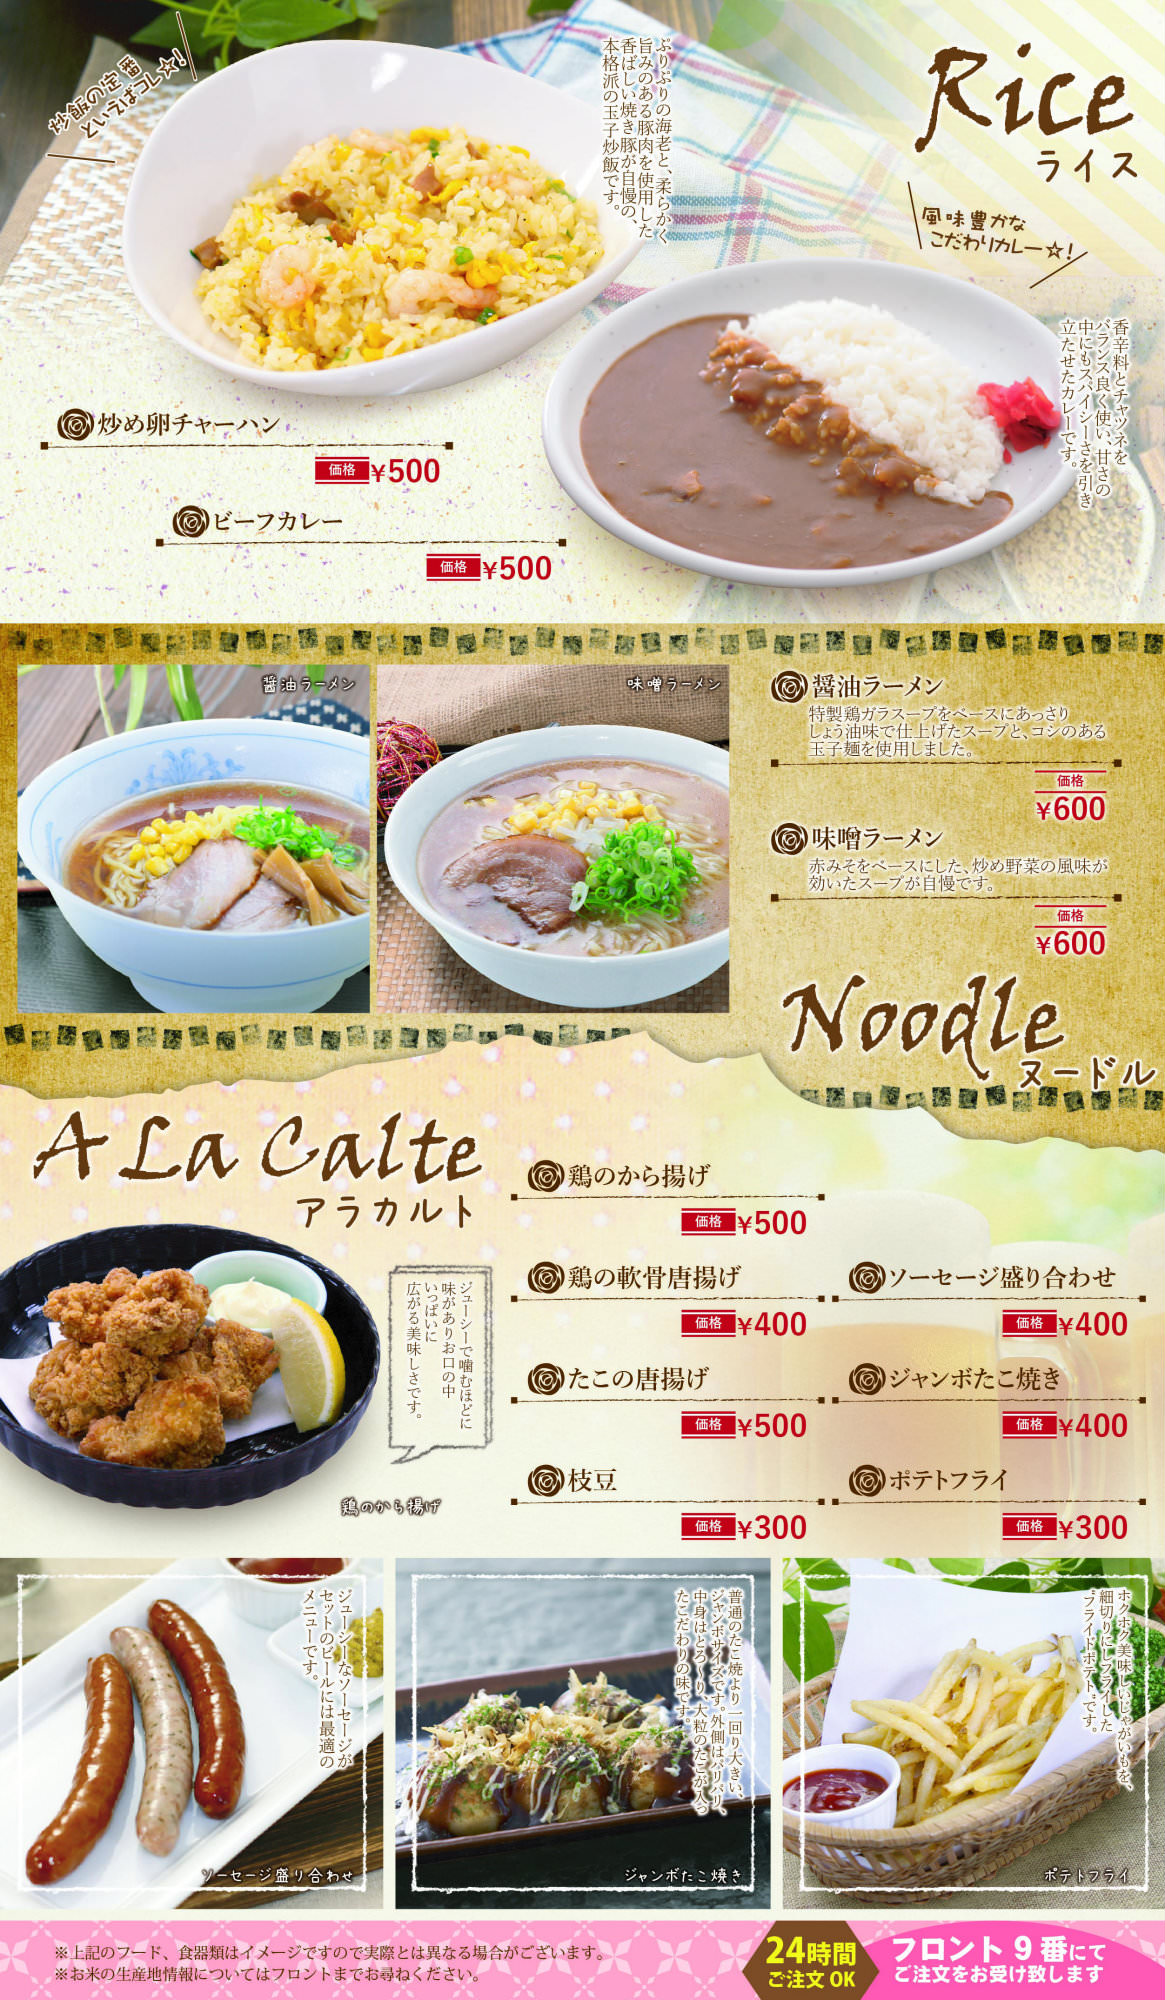 rice&noodle&alacalte